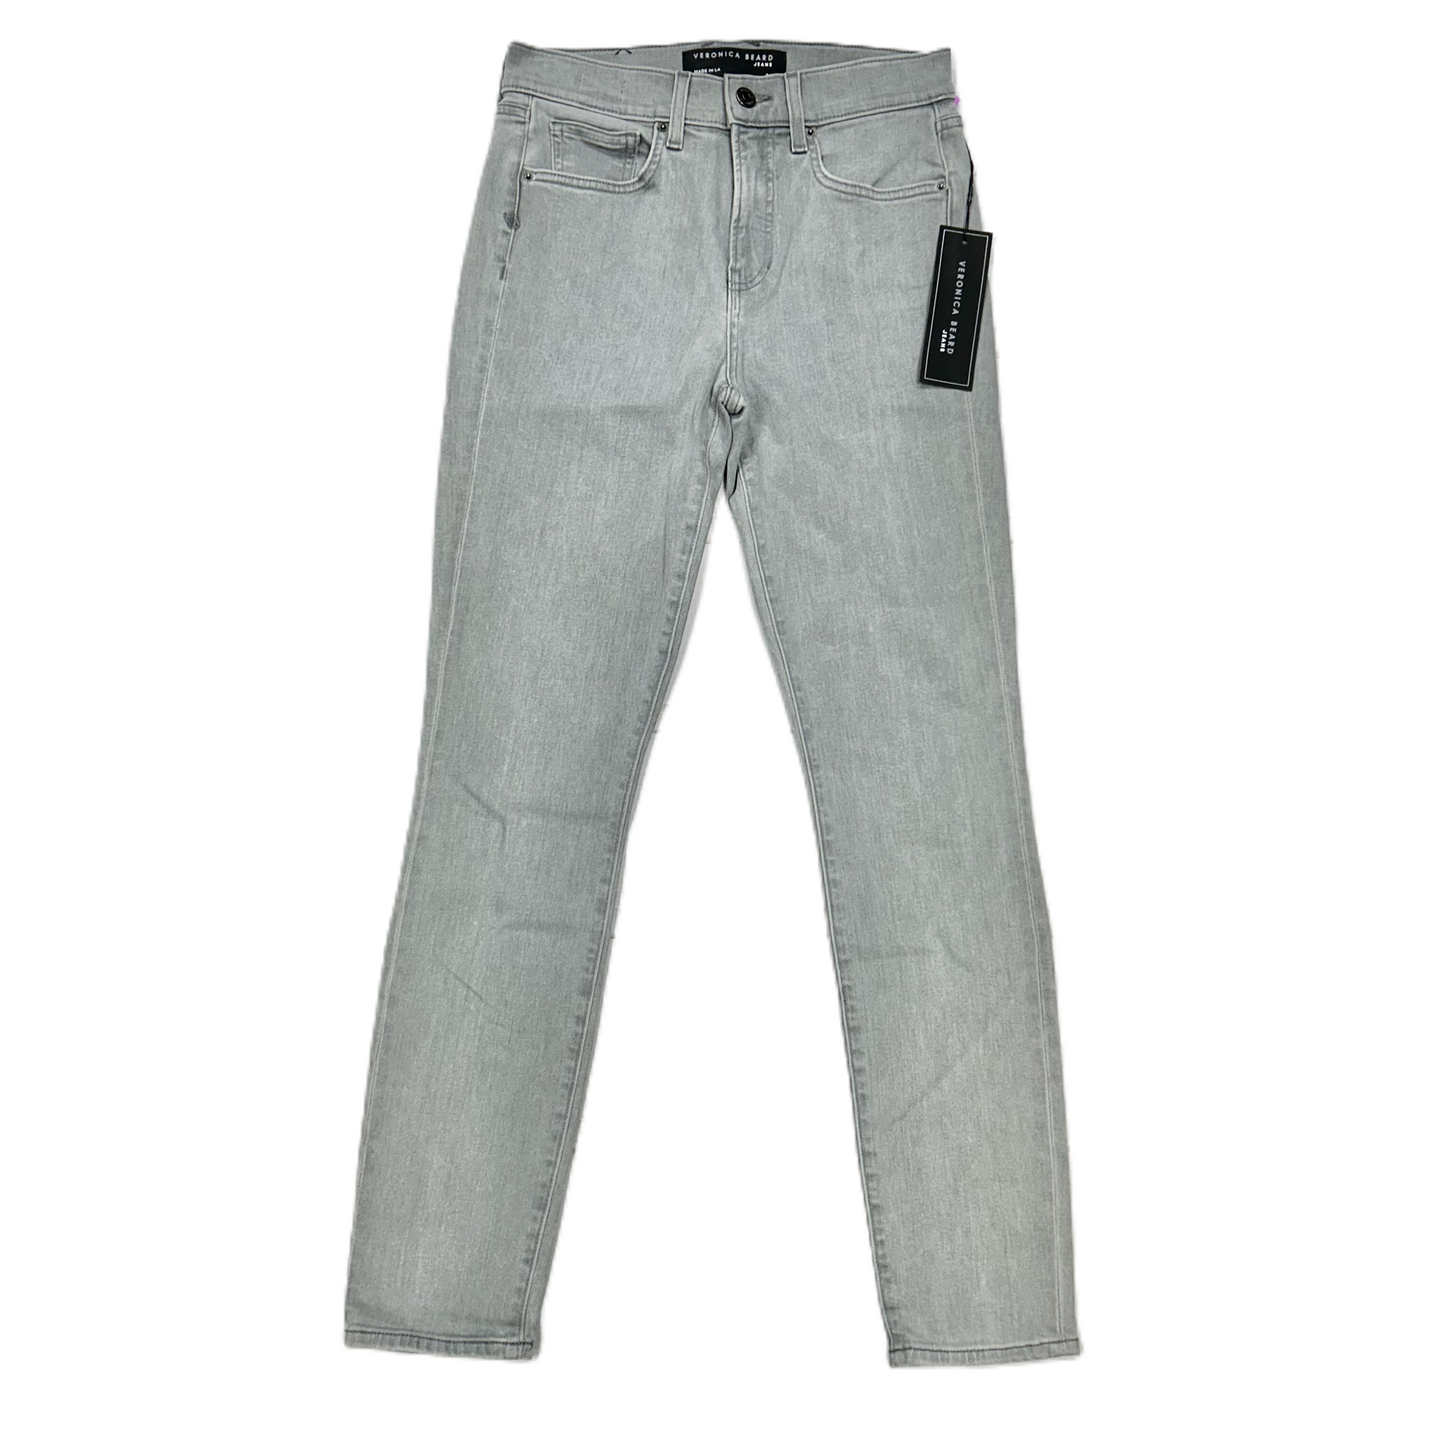 Grey Denim Jeans Designer By Veronica Beard, Size: 2